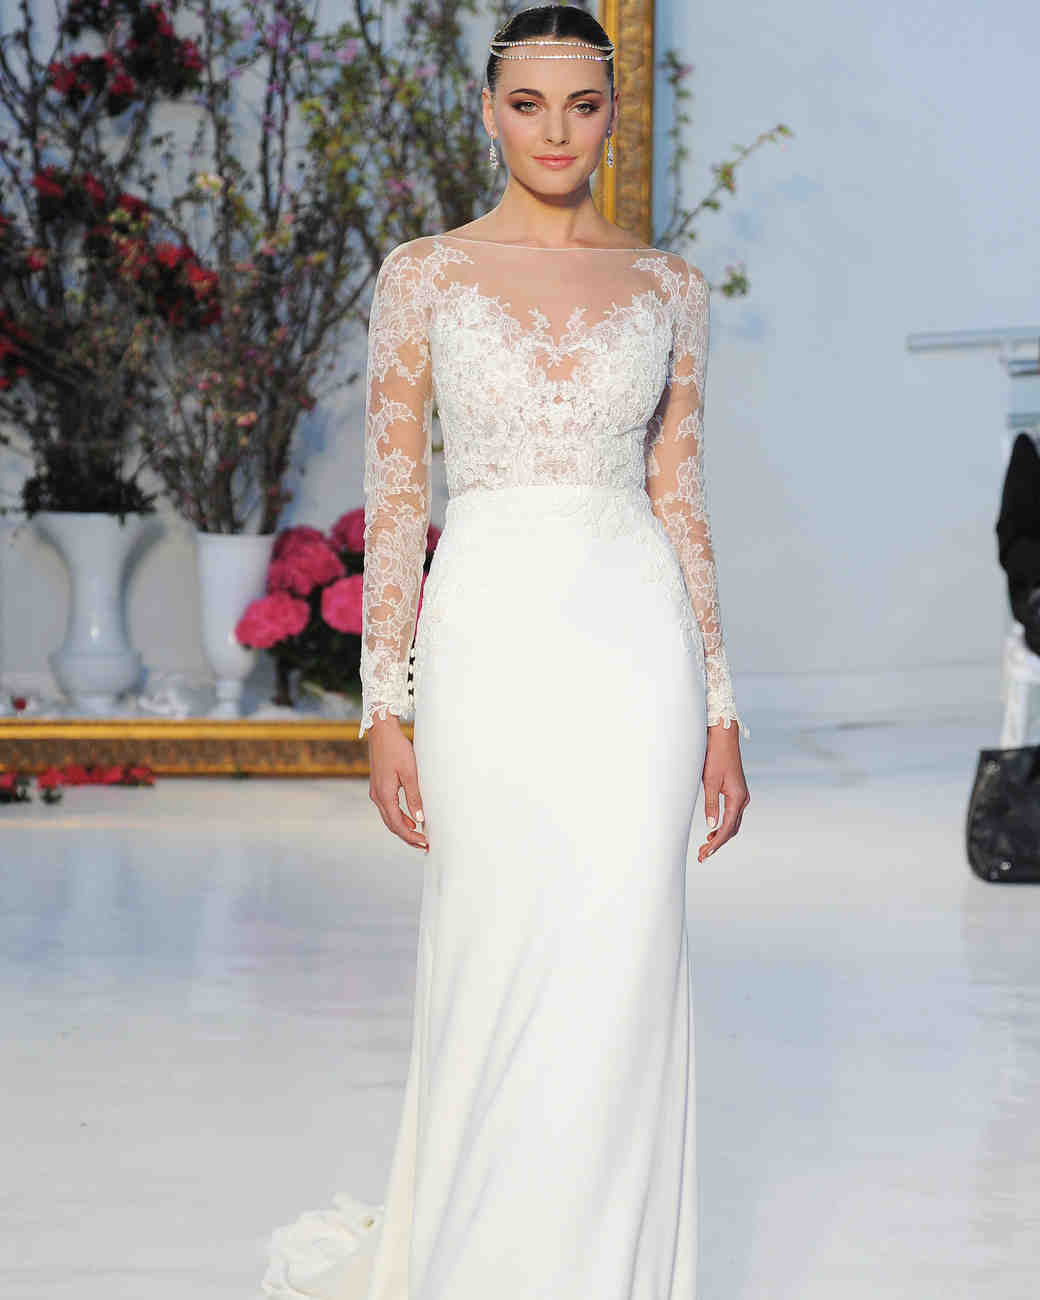 Long-Sleeve Wedding Dresses We Love | Martha Stewart Weddings